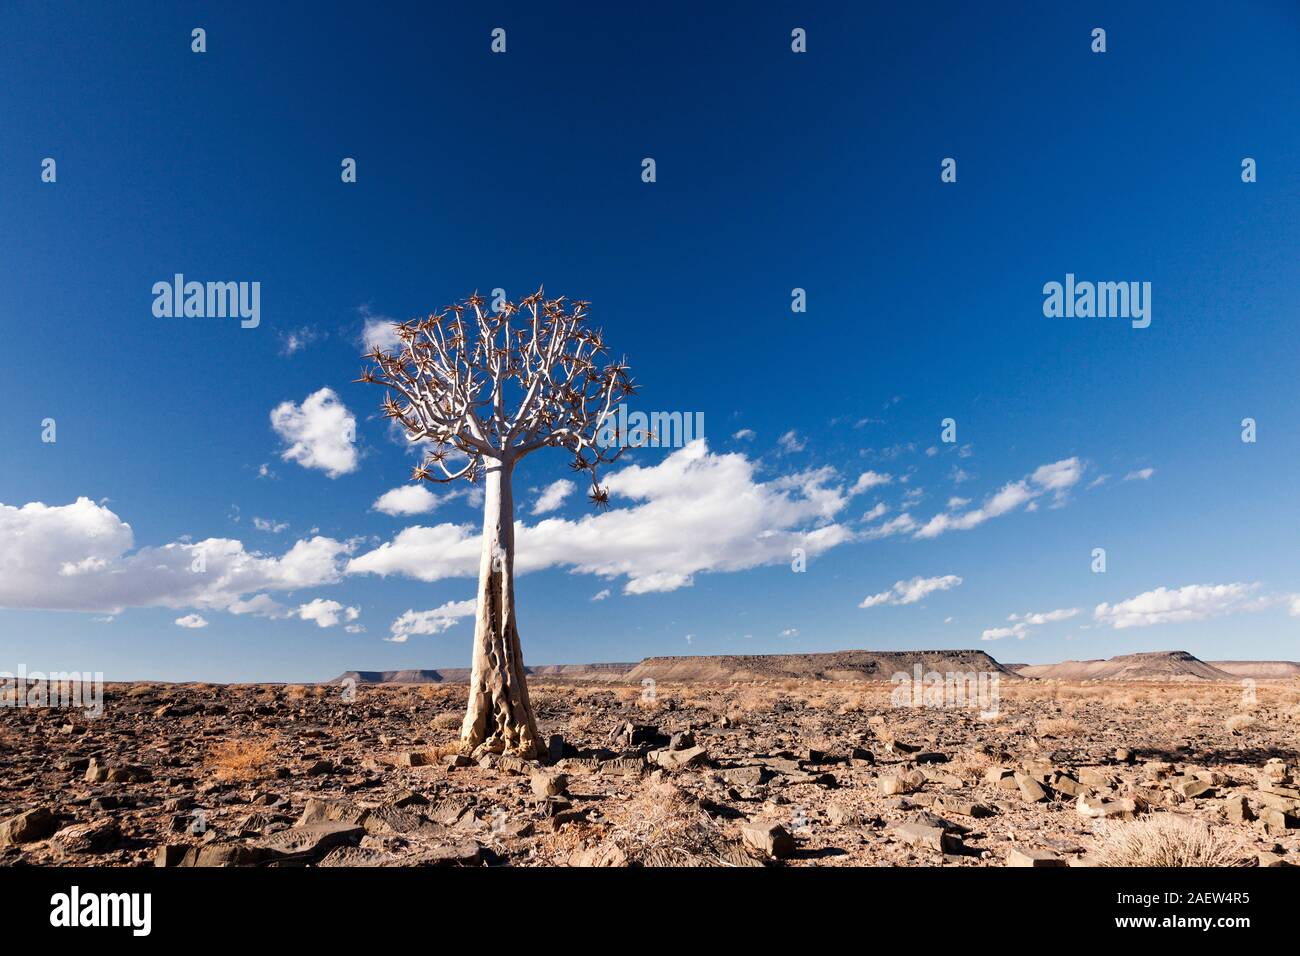 Lonely Qiver Tree, Aloe dichotoma, kokerboom, gravel desert, near Grunau, Karas Region, Namibia, Southern Africa, Africa Stock Photo